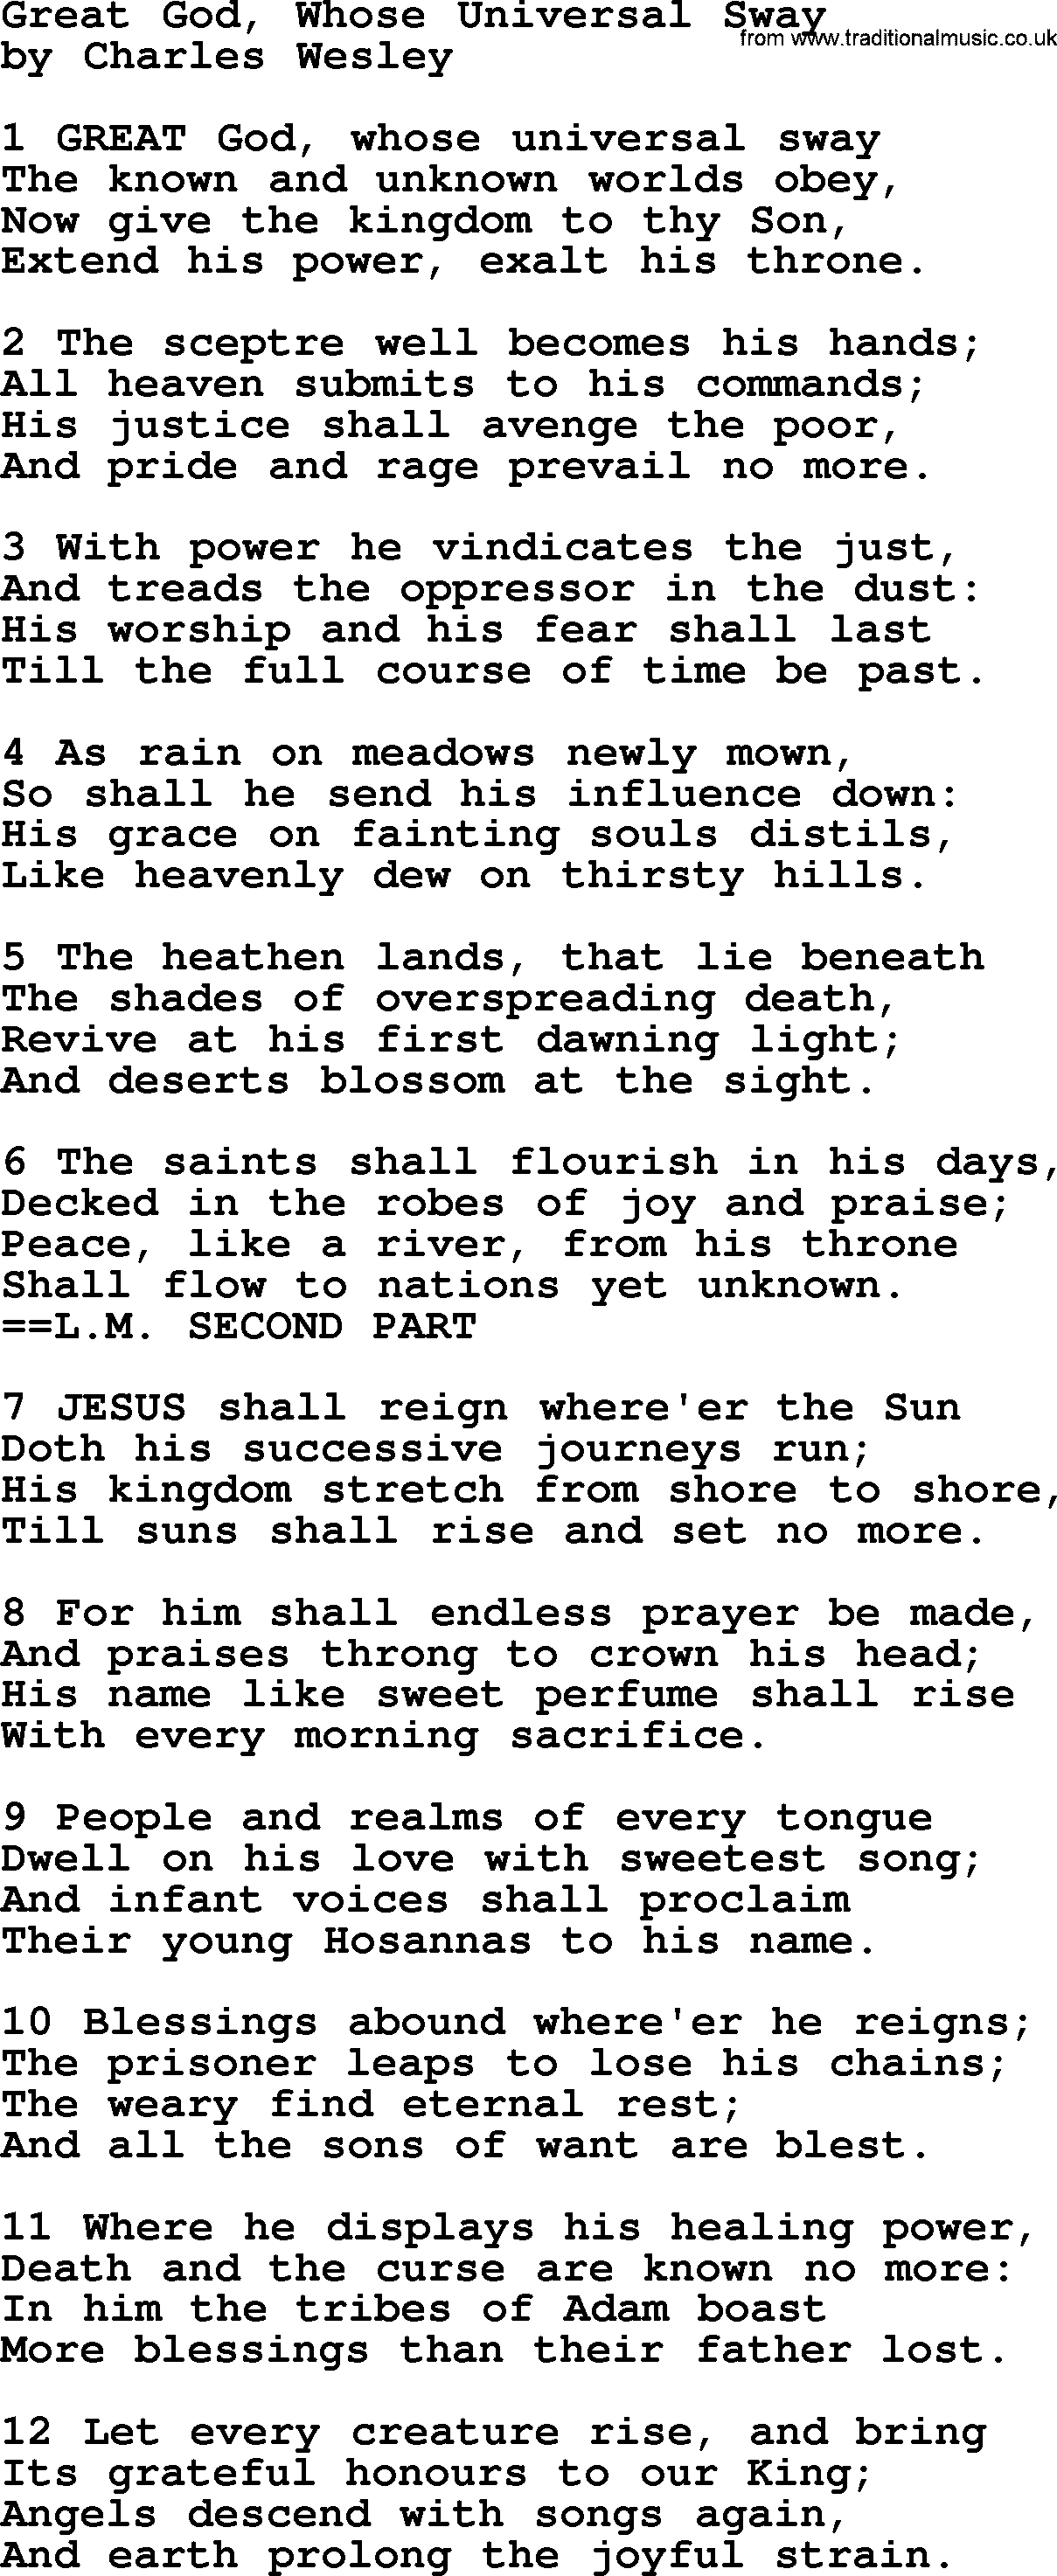 Charles Wesley hymn: Great God, Whose Universal Sway, lyrics